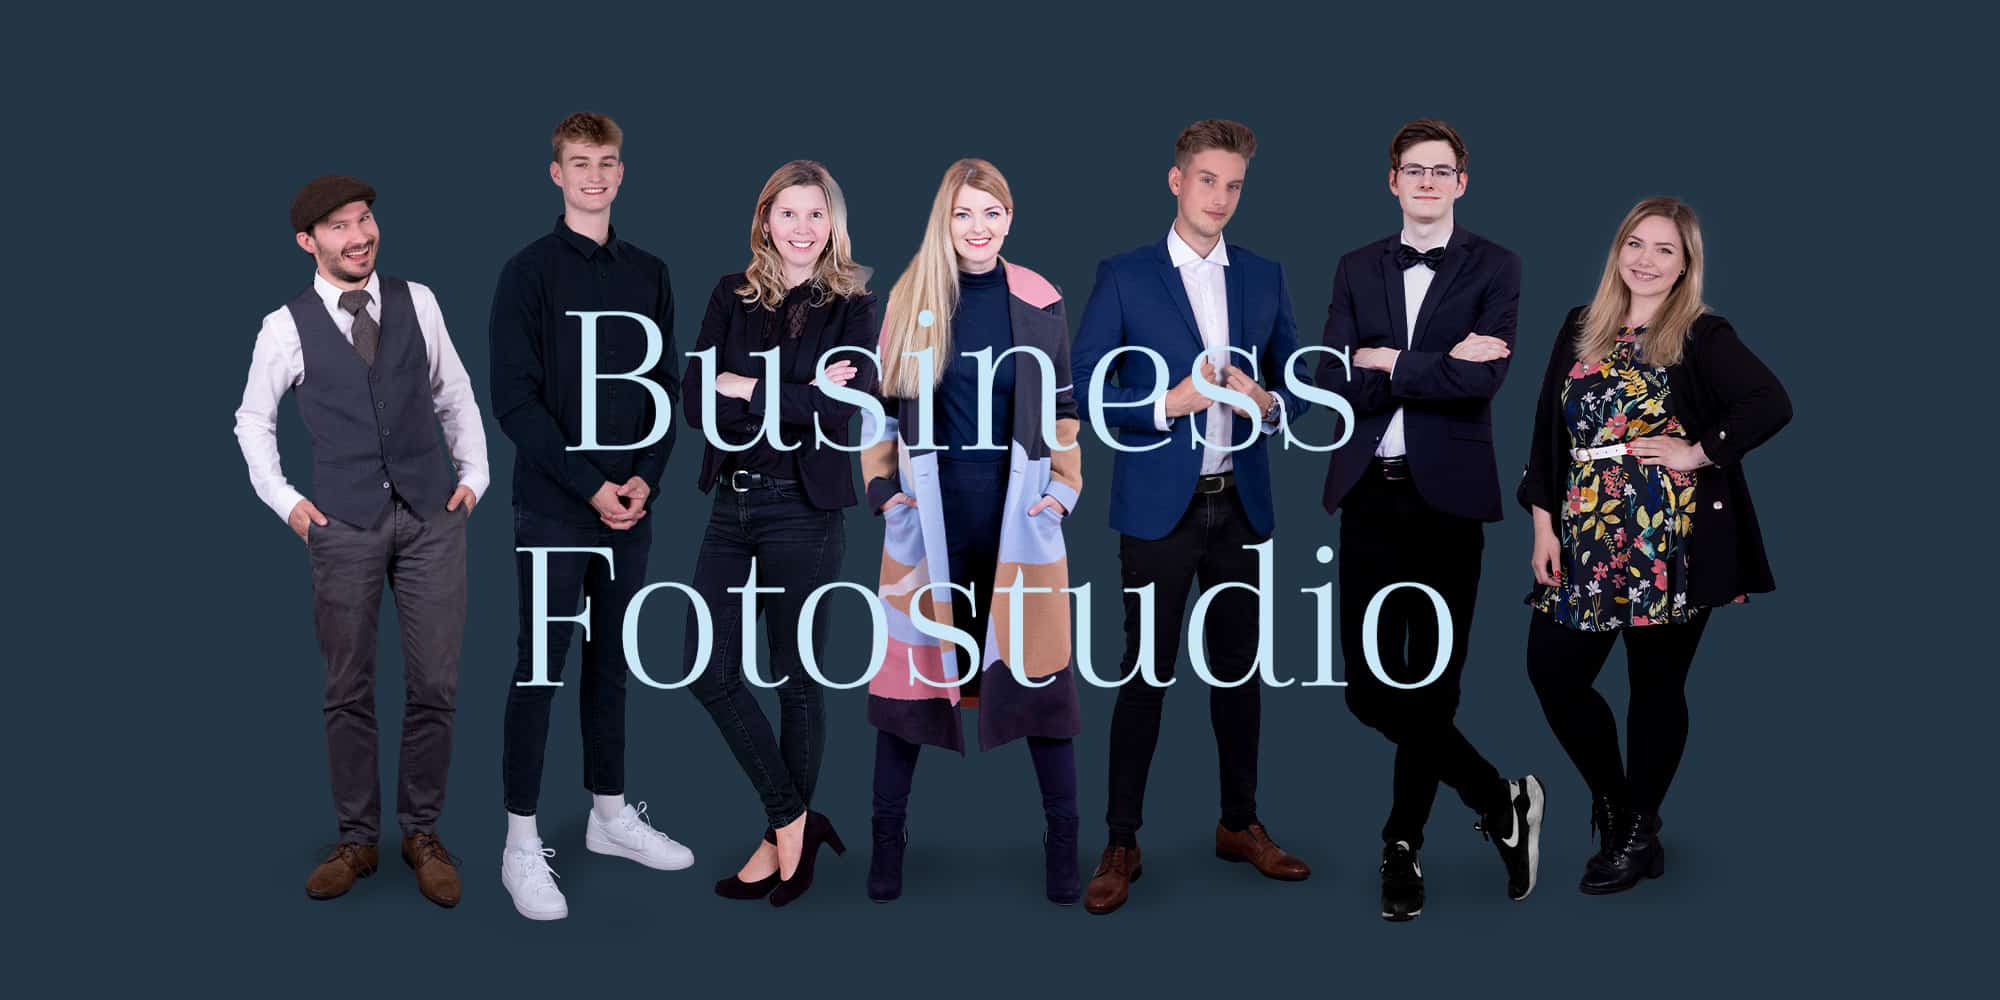 BUSINESS Fotostudio - Team